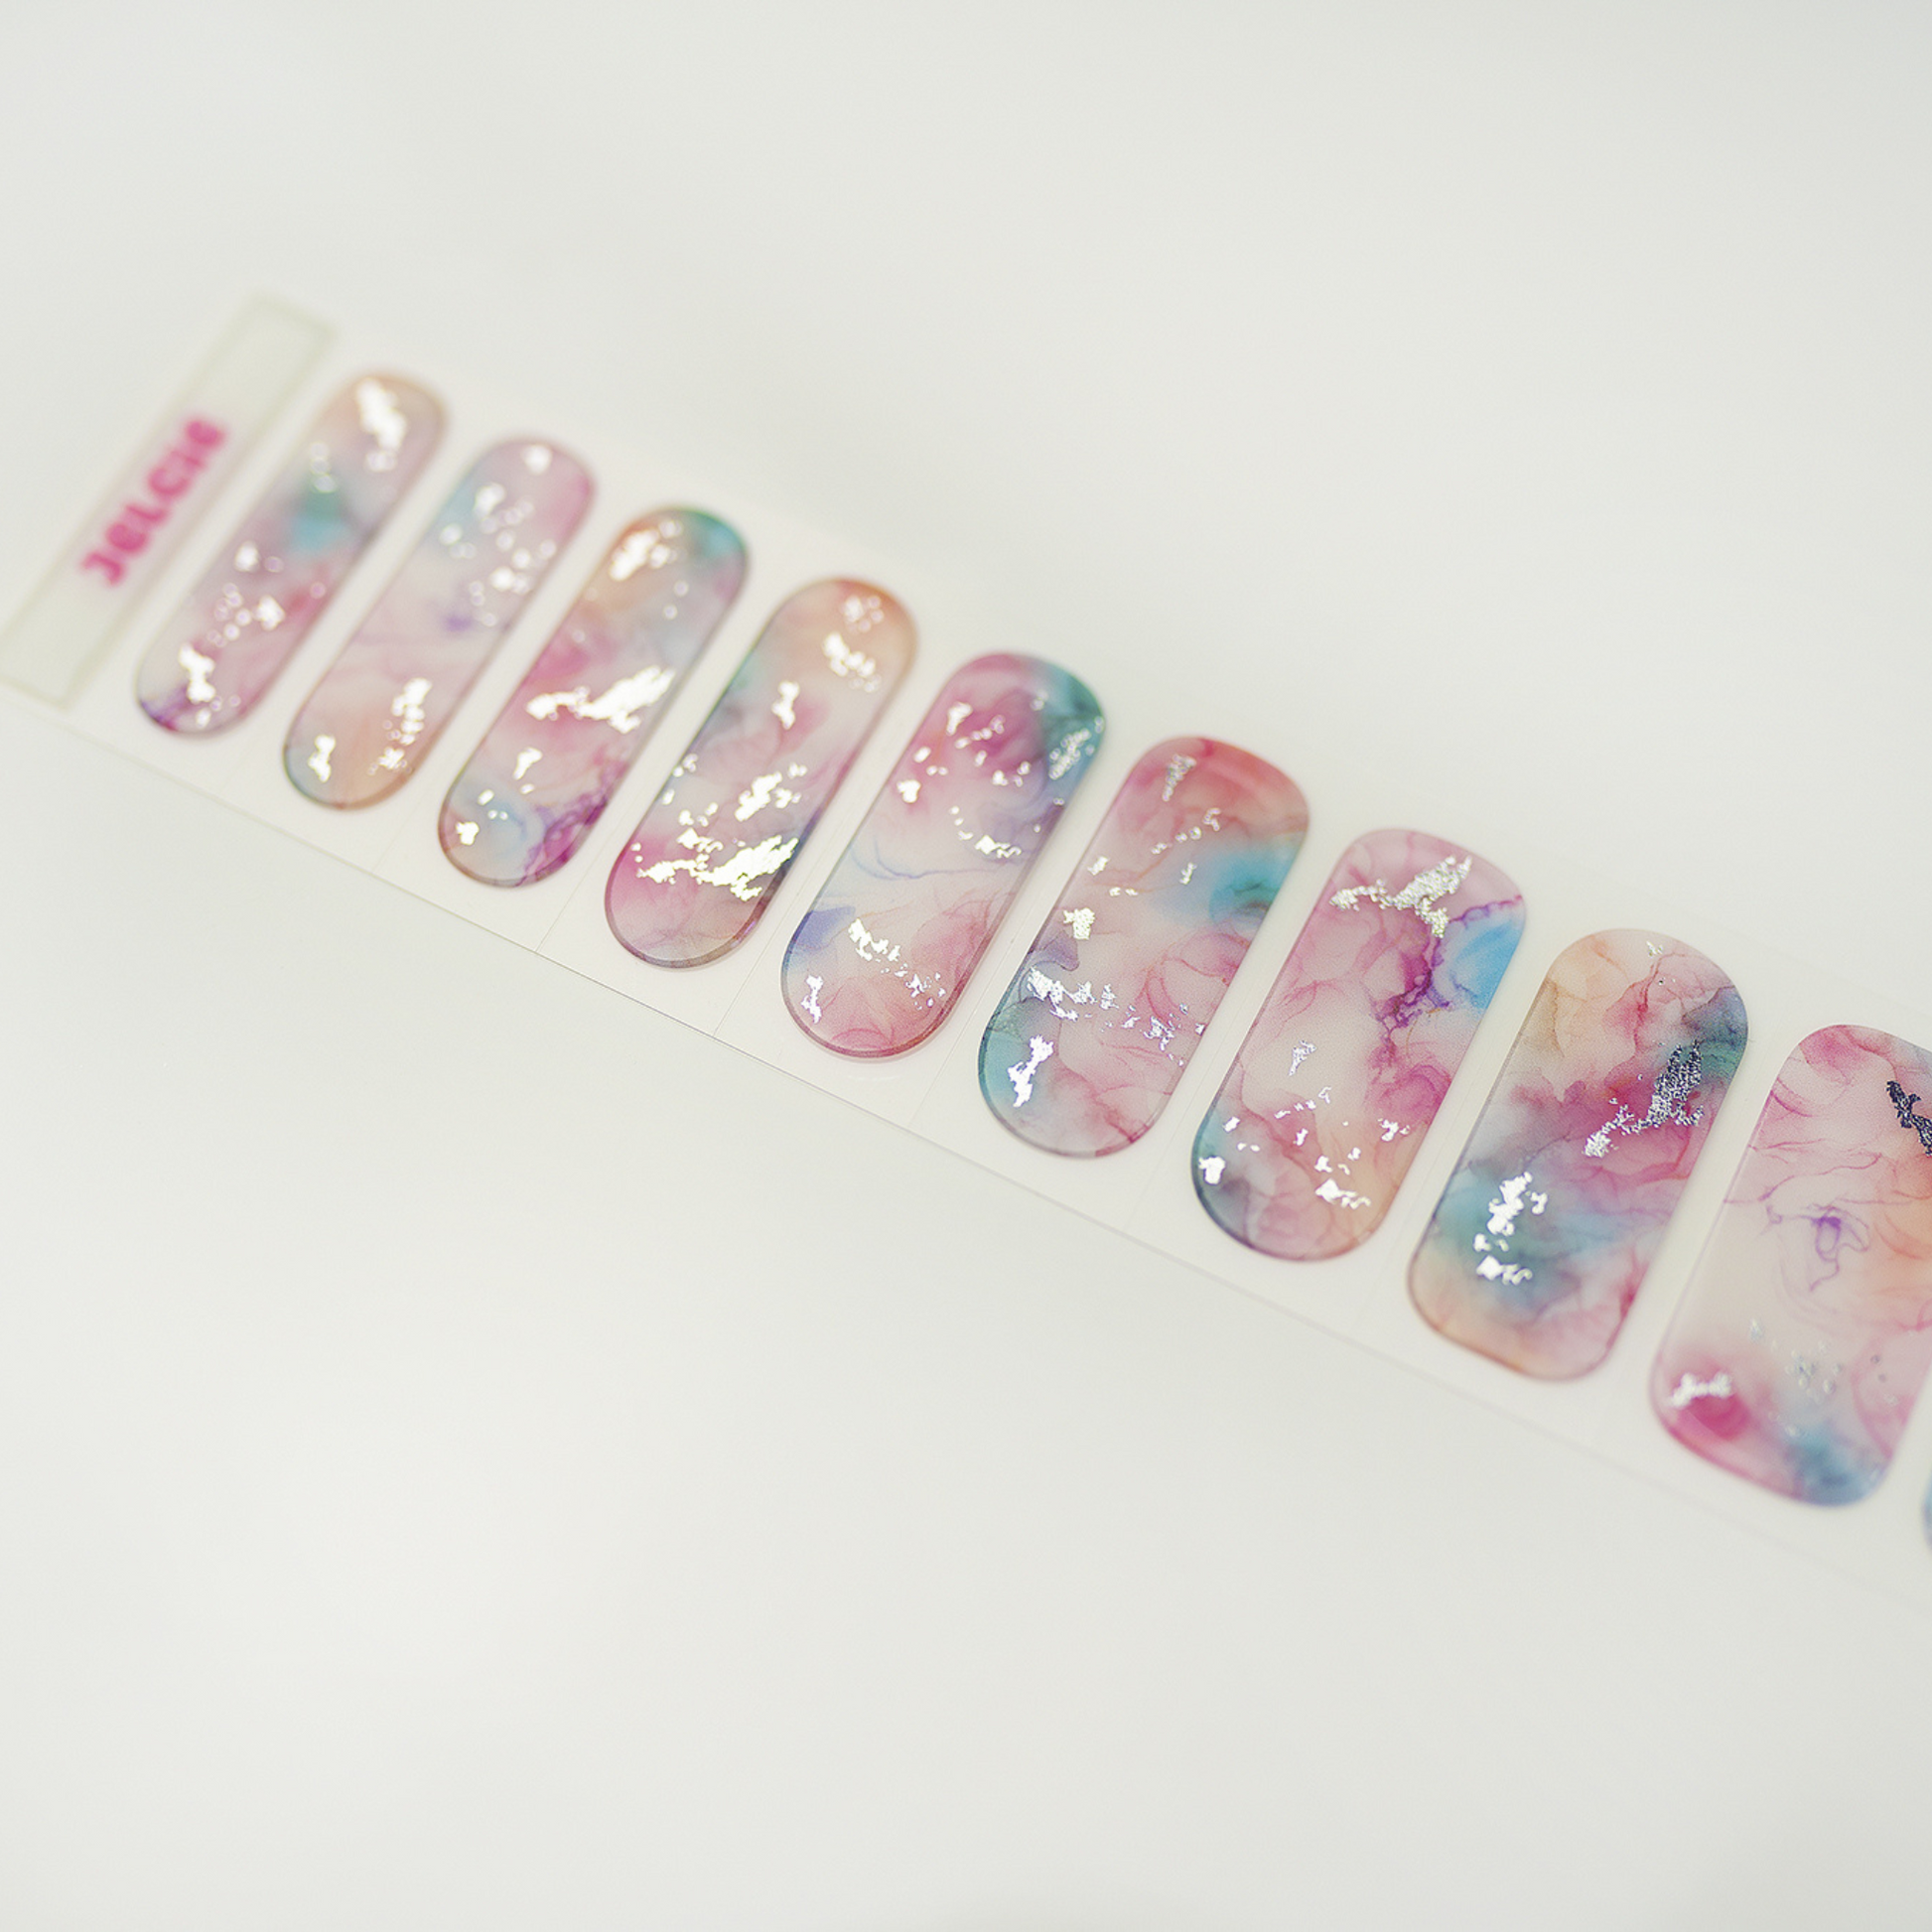 Nail Stickers by Jelcie: Raspberry Semi-Cured Nail Gellies